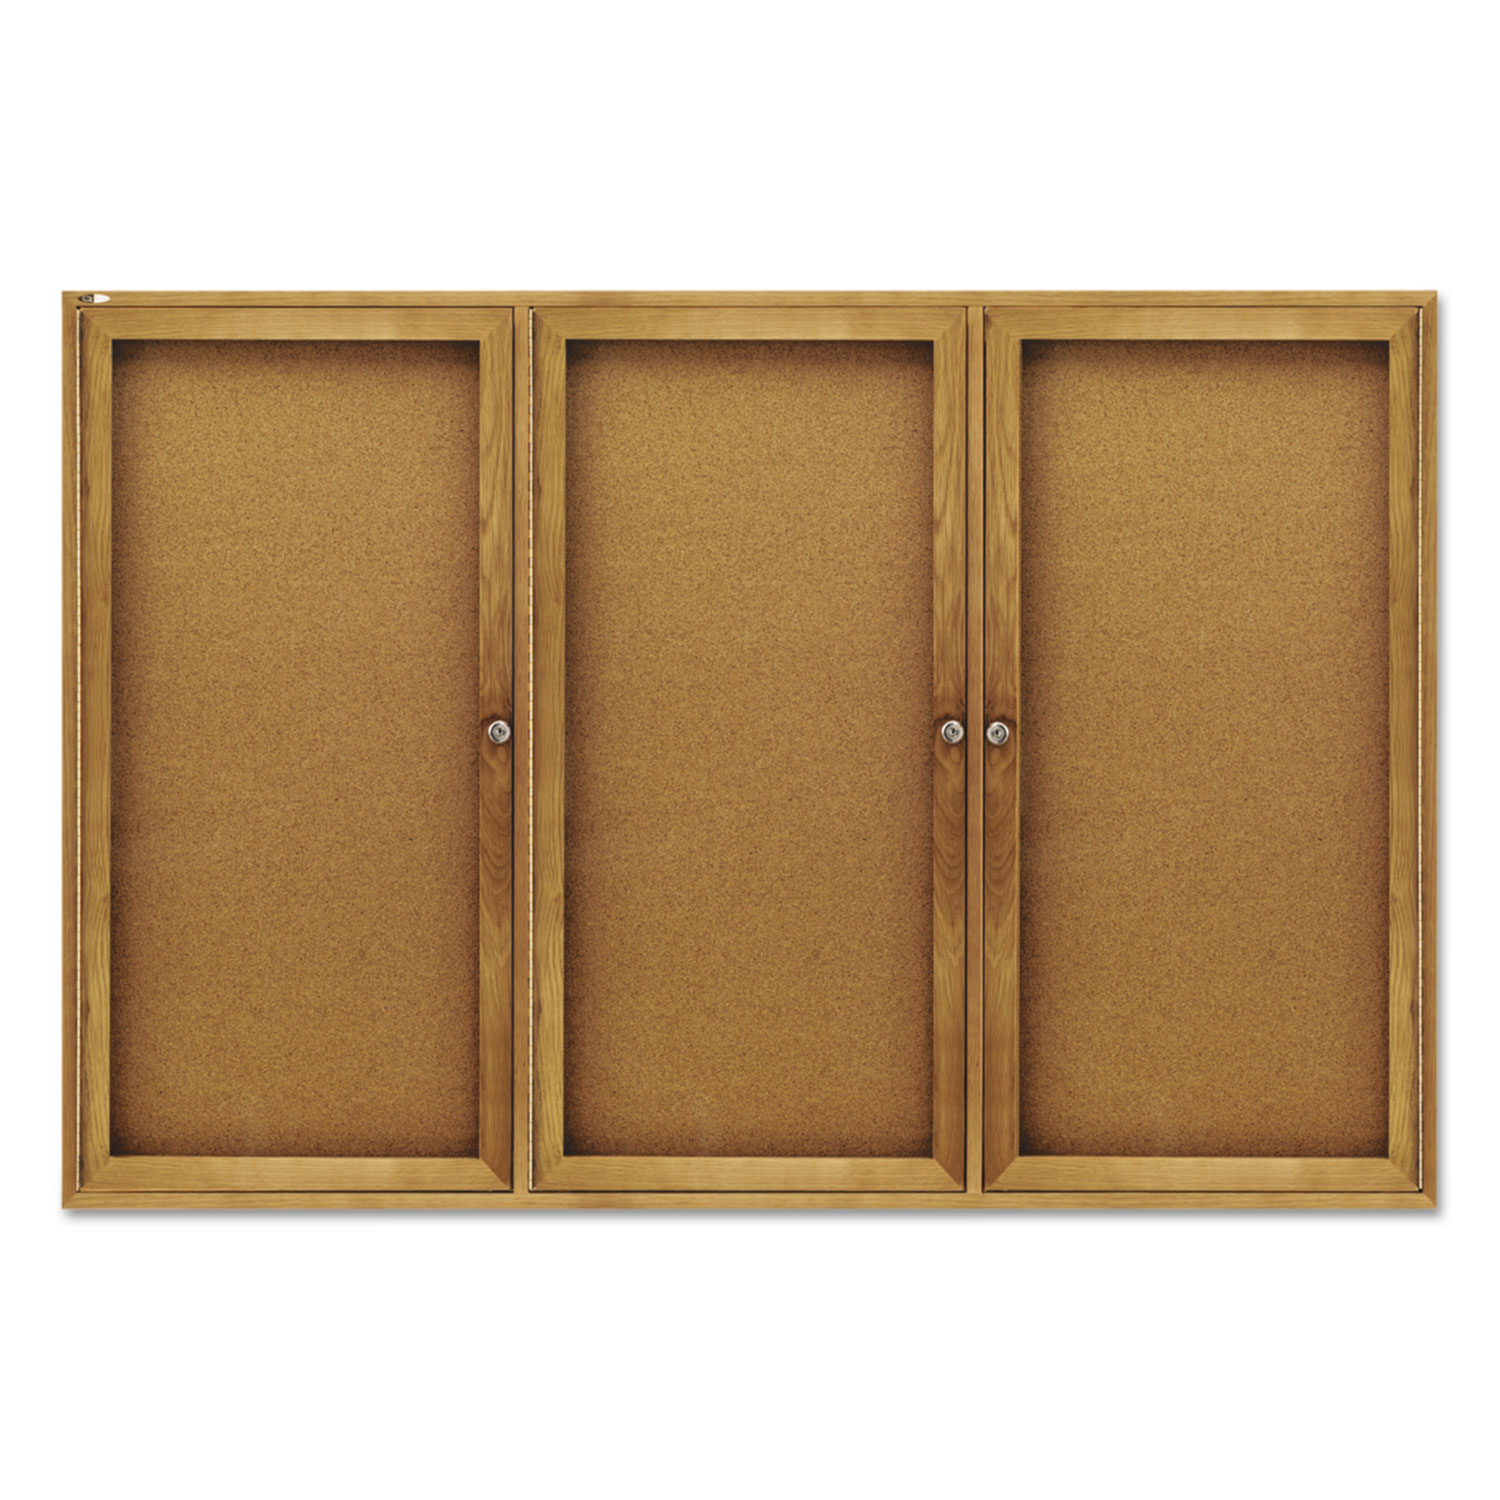 Enclosed Bulletin Board, Natural Cork/Fiberboard, 72 x 48, Oak Frame